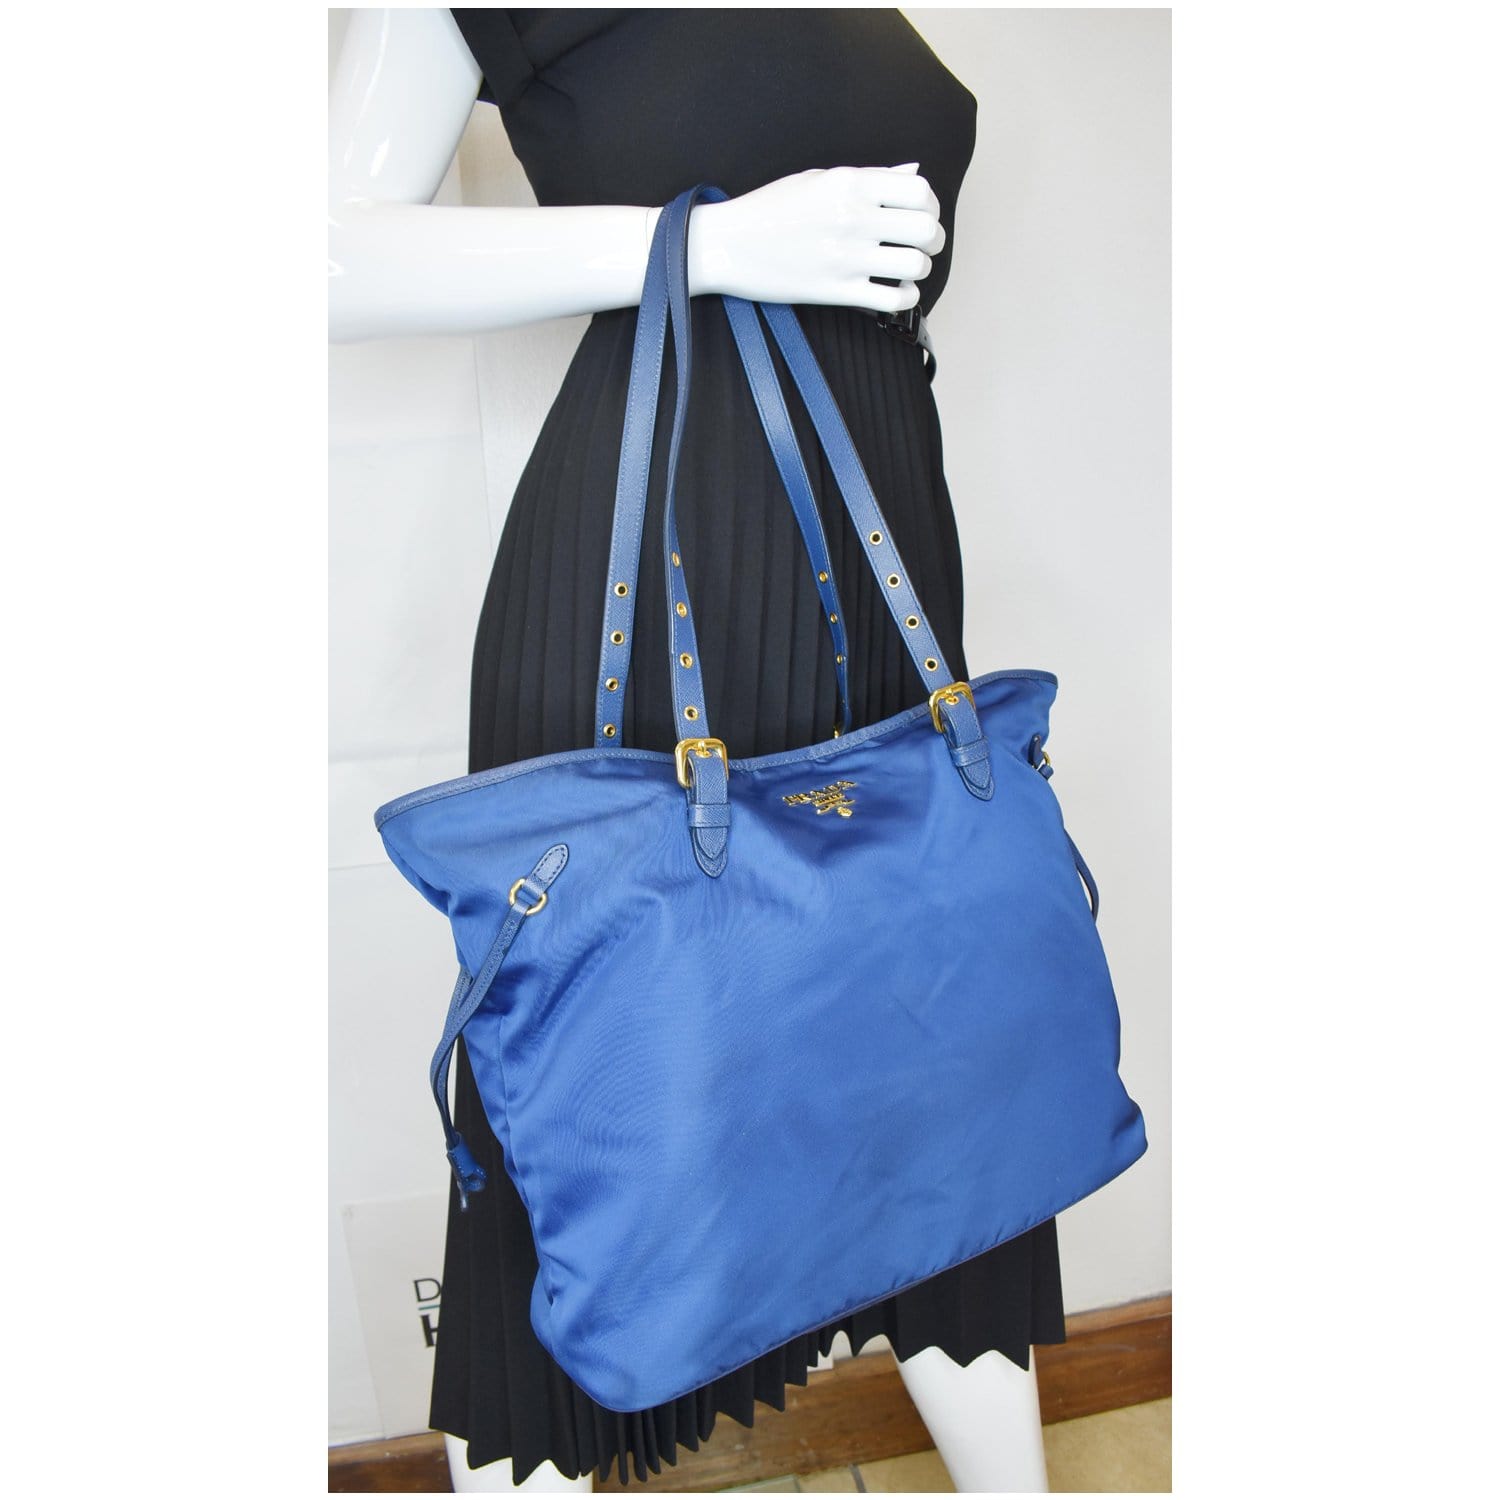 PRADA Black Tessuto Nylon Saffiano Women Fashion Tote Bag with Shoulder  Strap